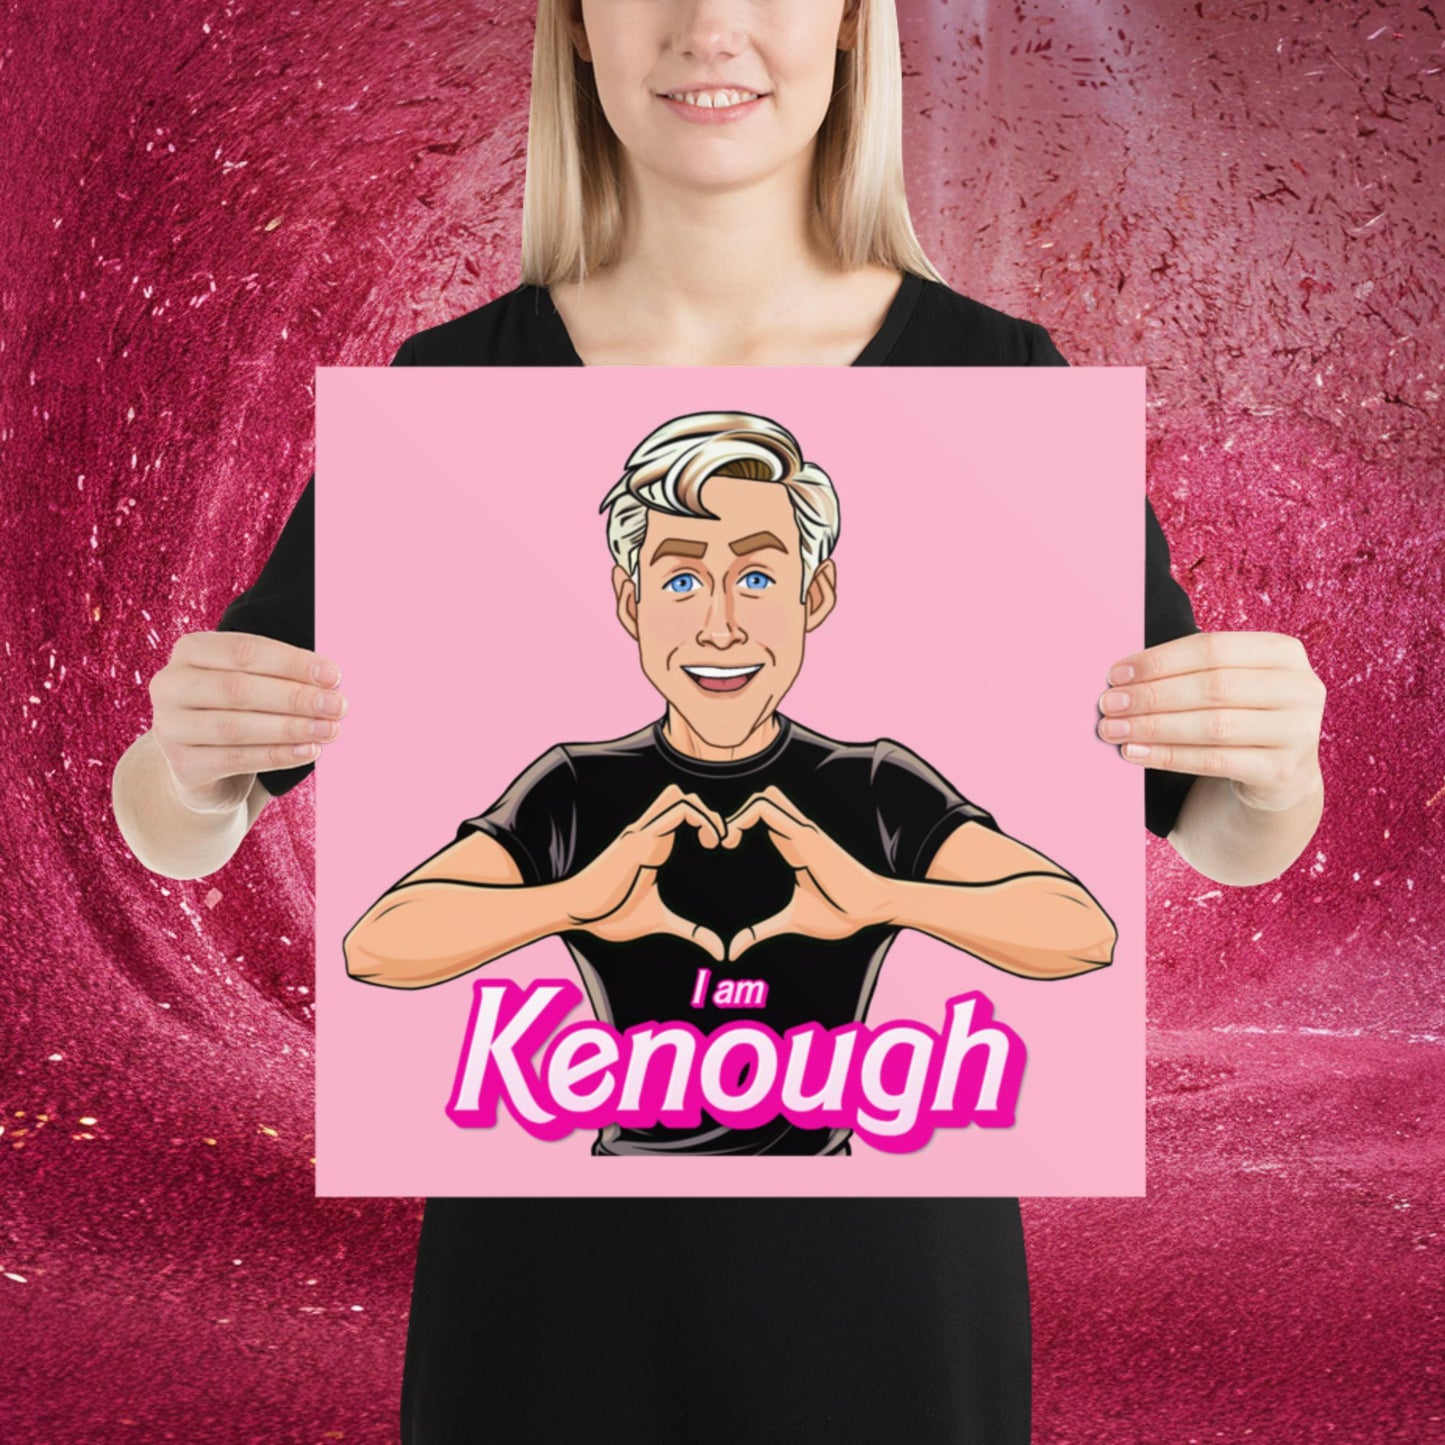 I am Kenough Ryan Gosling Ken Barbie Movie Poster Next Cult Brand